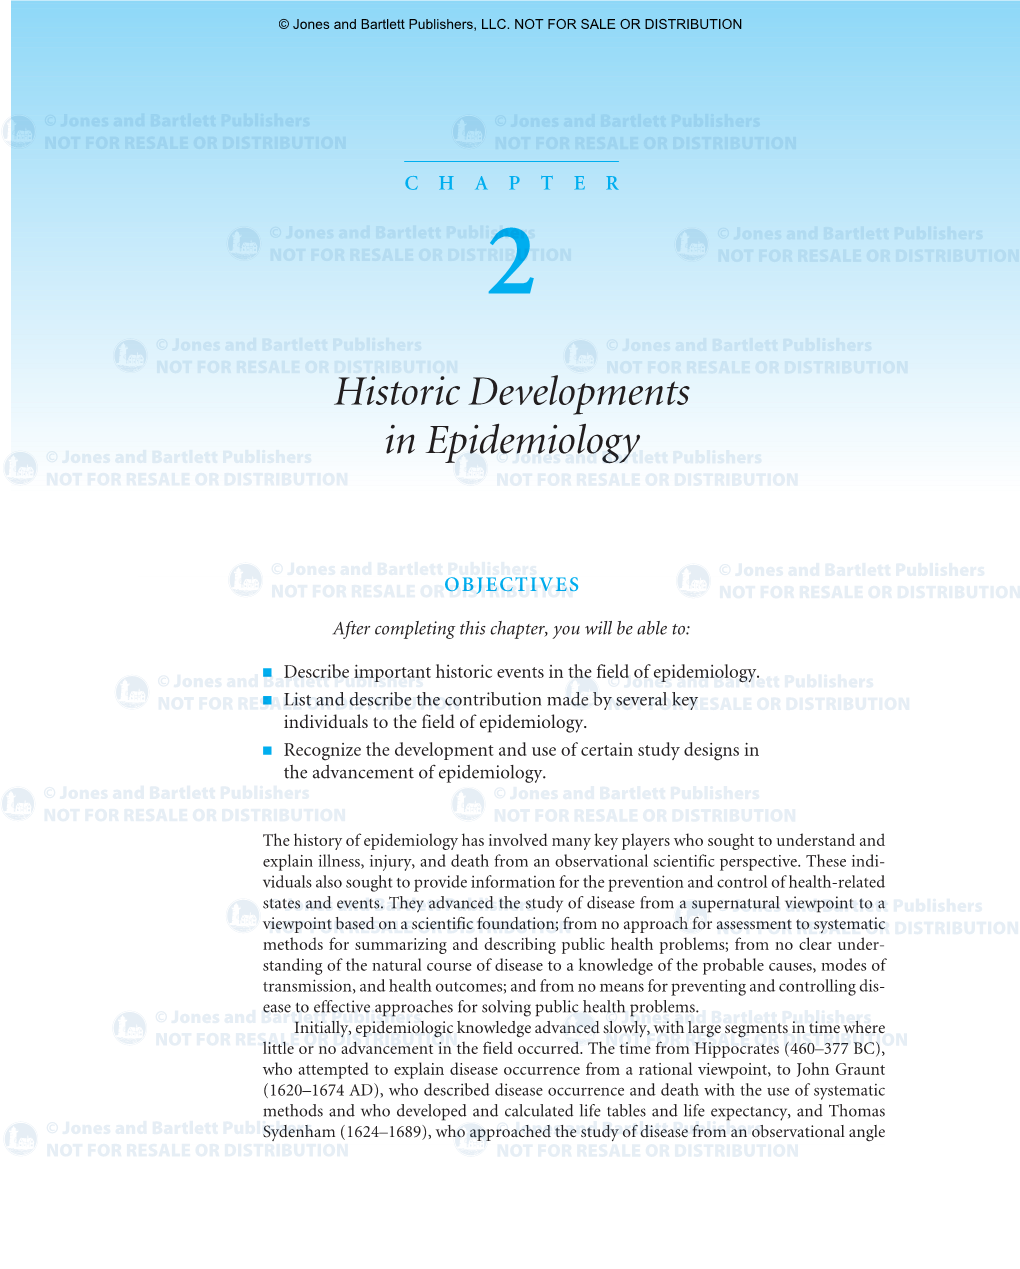 Historic Developments in Epidemiology